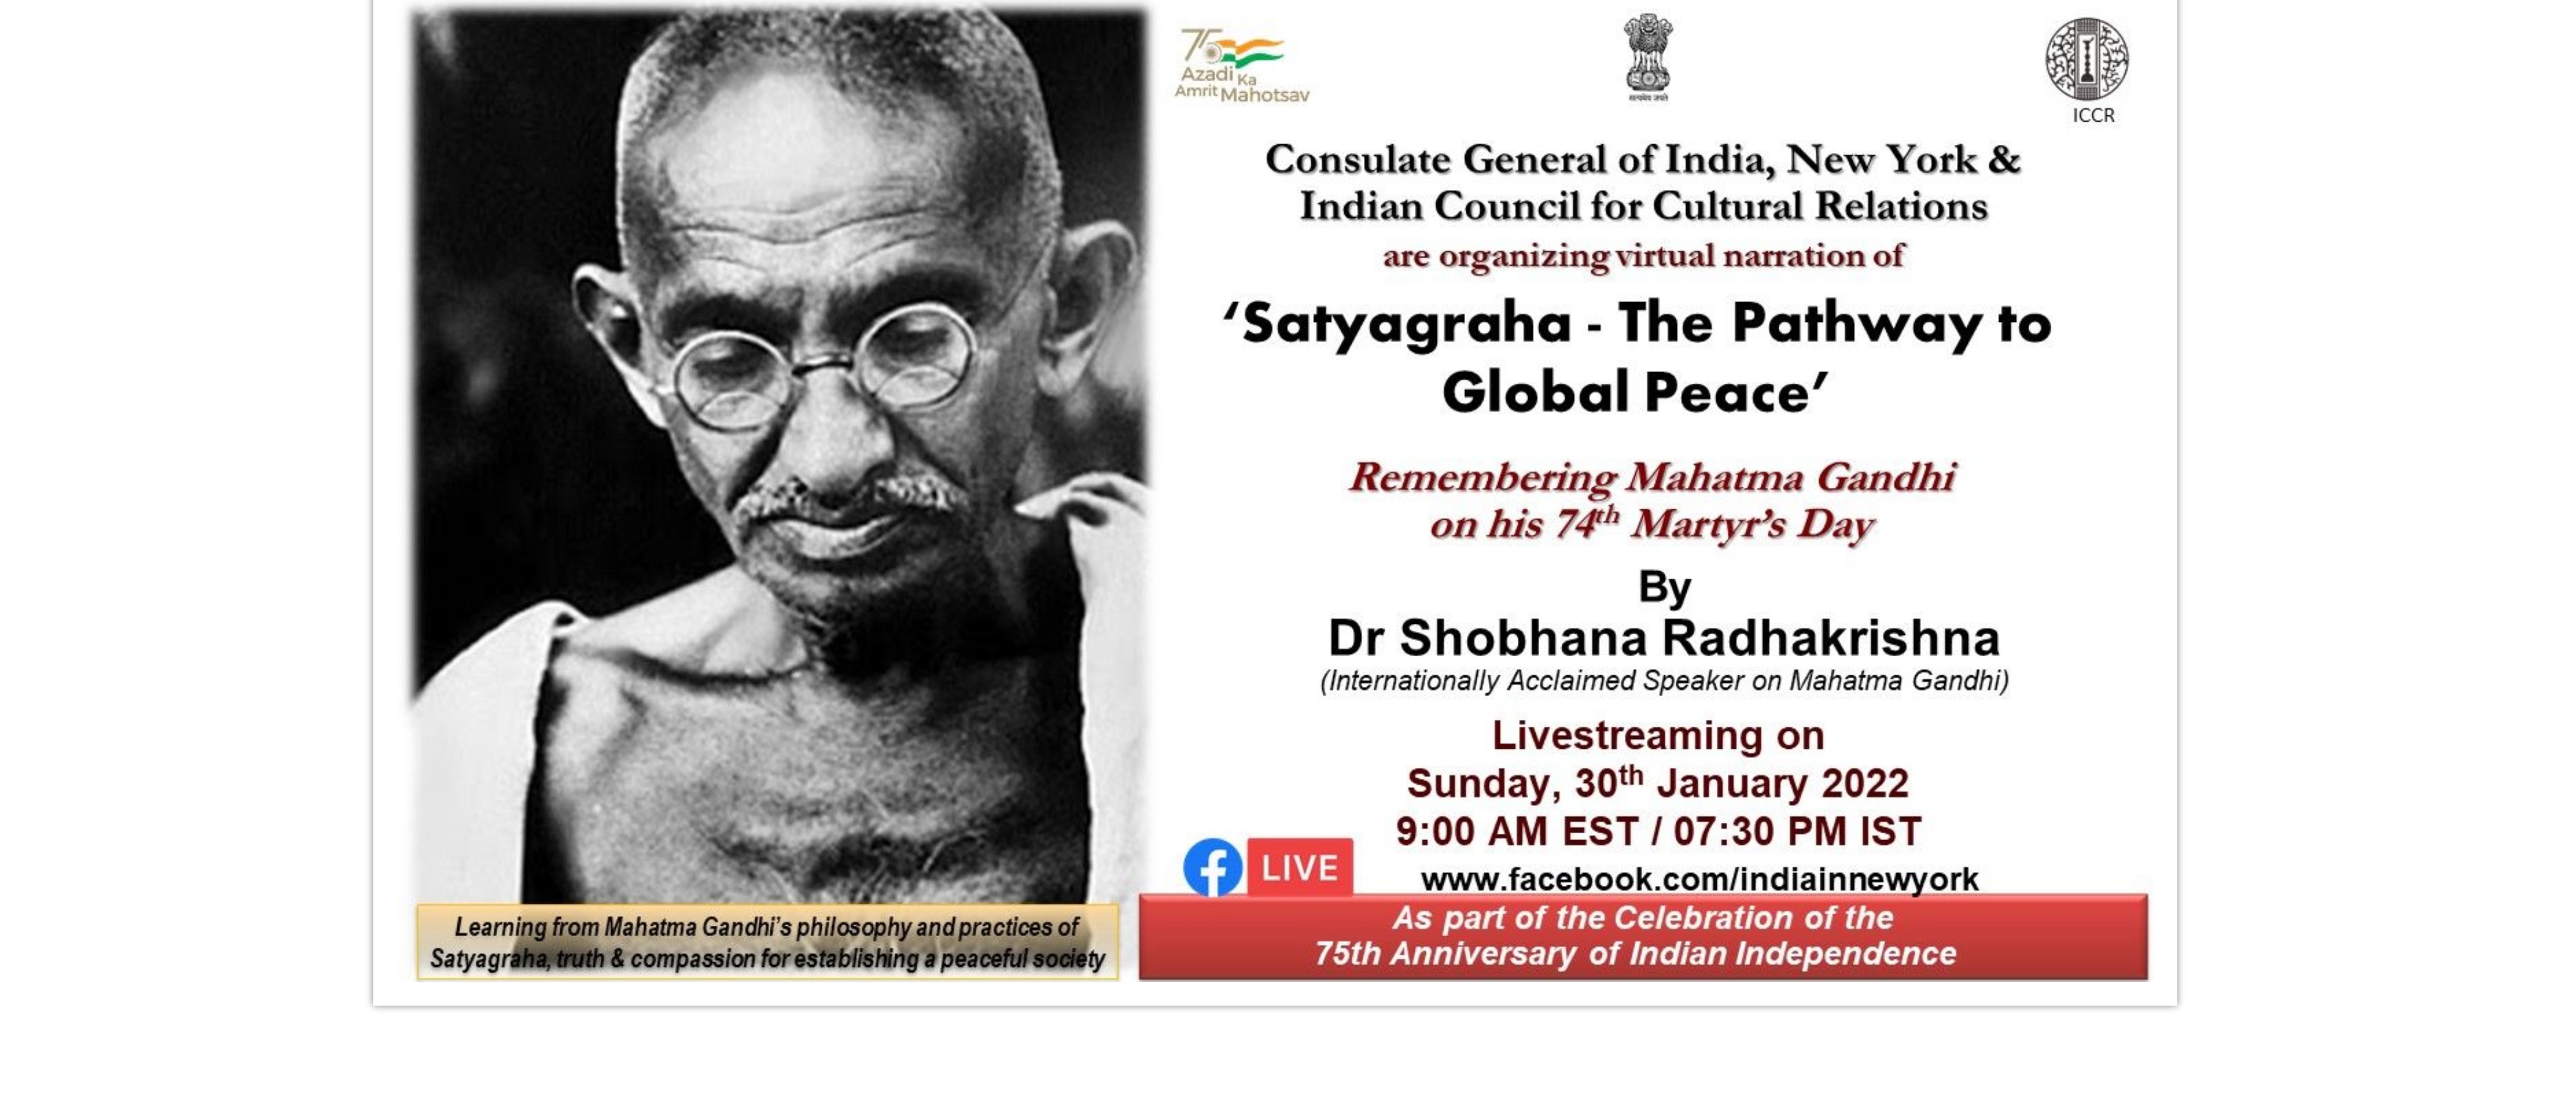  Remembering Mahatma Gandhi on his 74th Martyr’s Day - Virtual Narration by Dr. Shobhana Radhakrishna